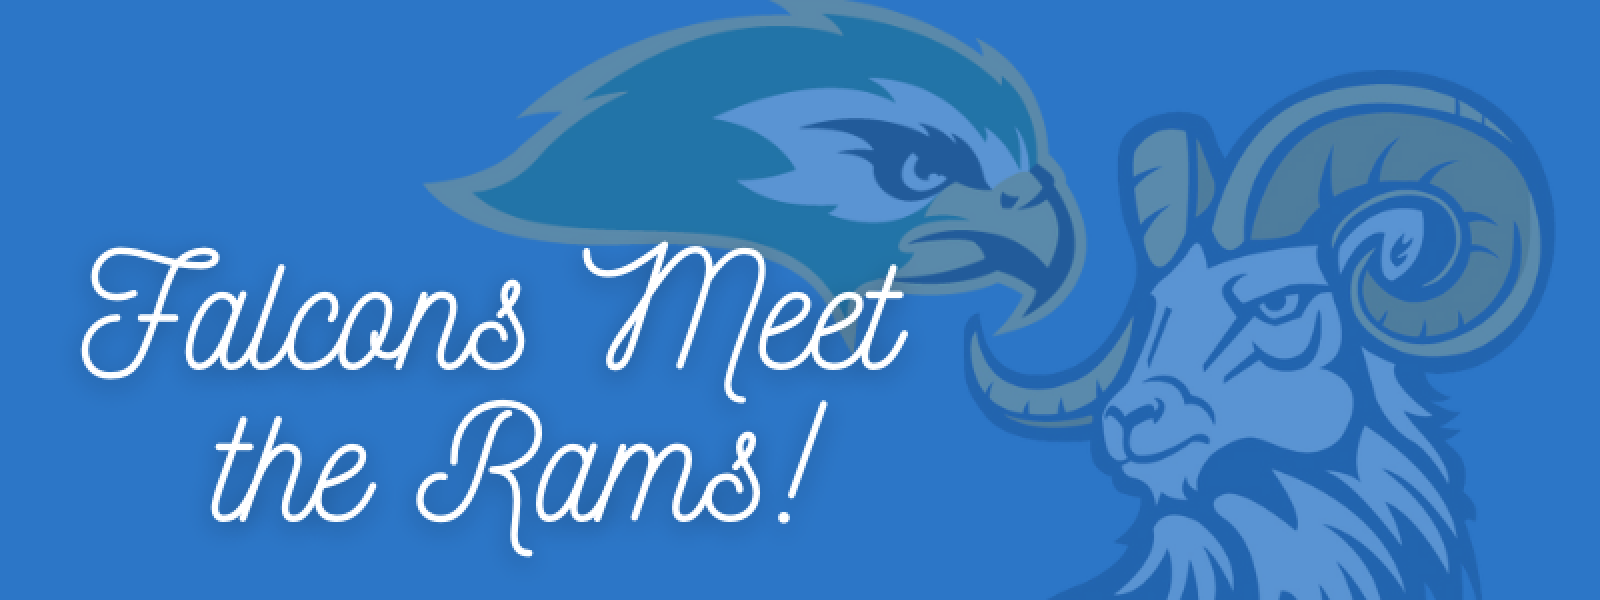 Falcons Meet the Rams!